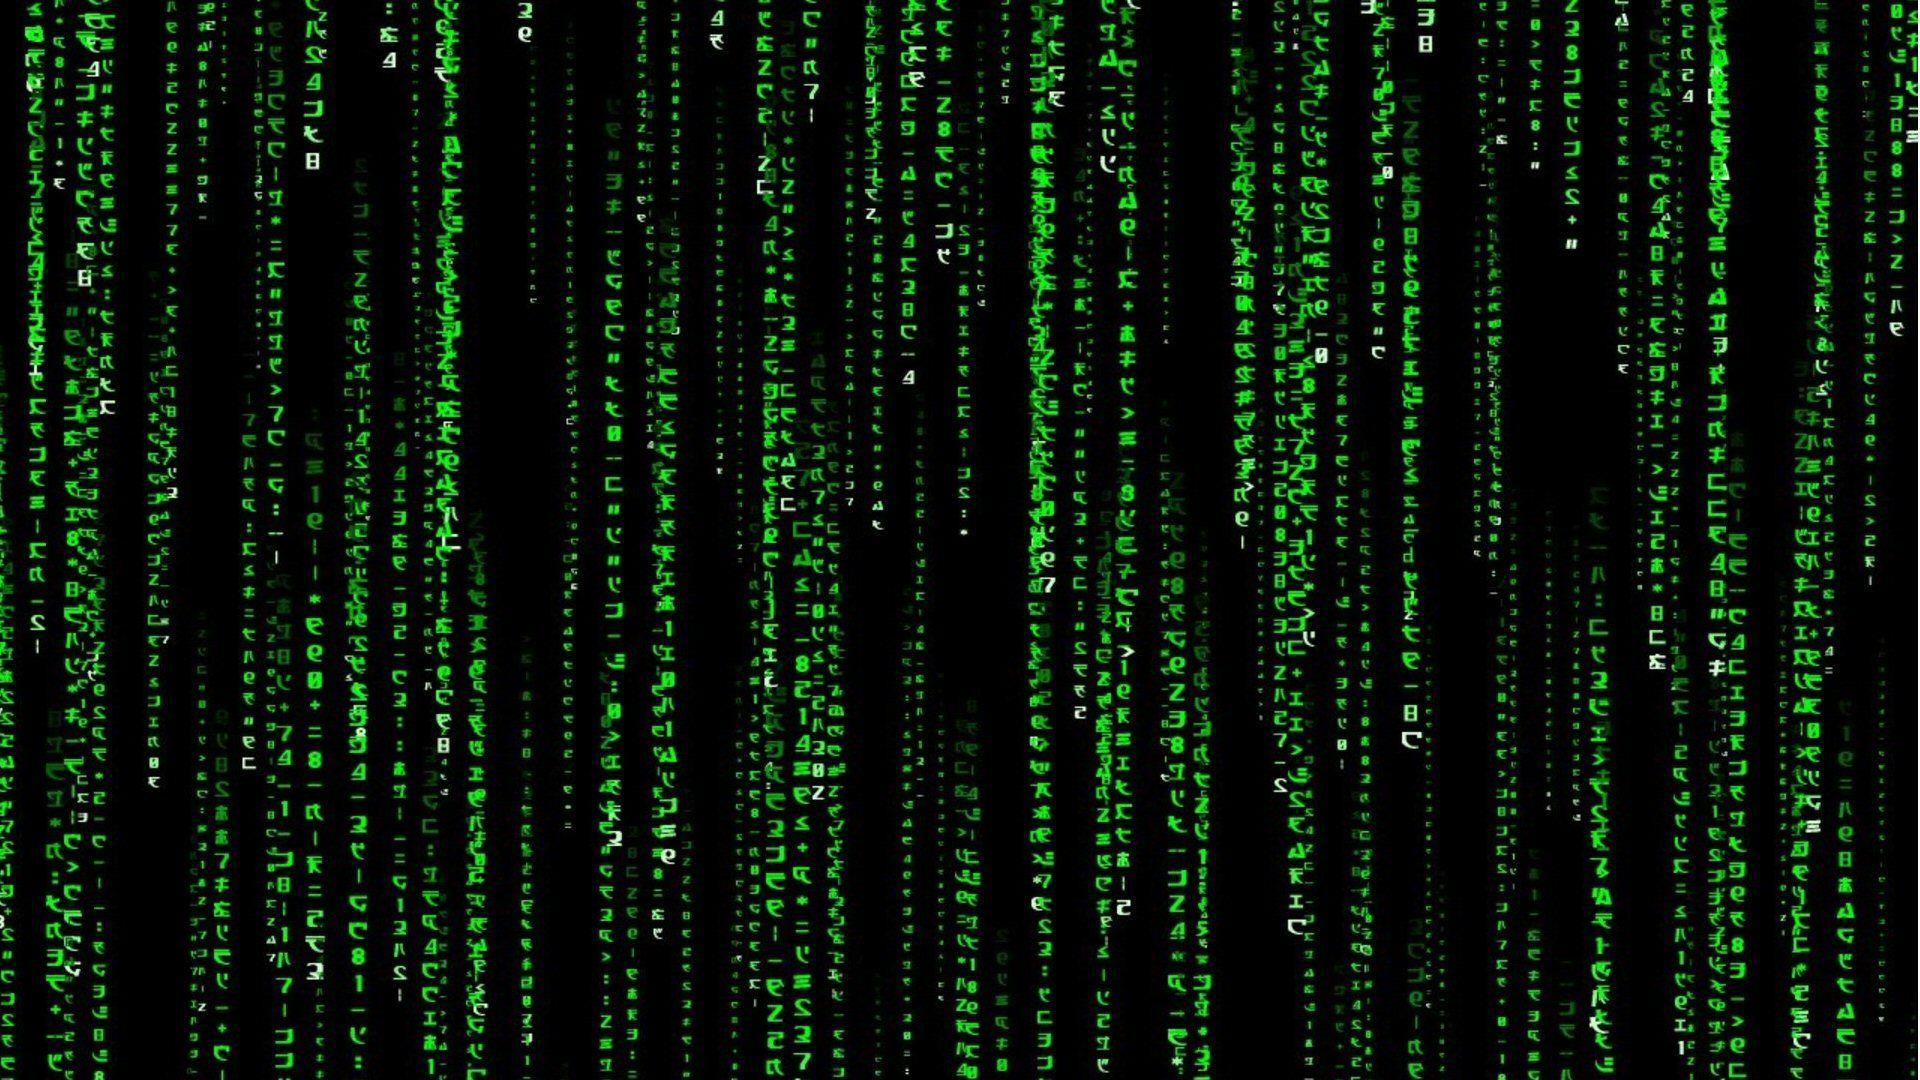 animated matrix wallpaper full HD download amazing background image